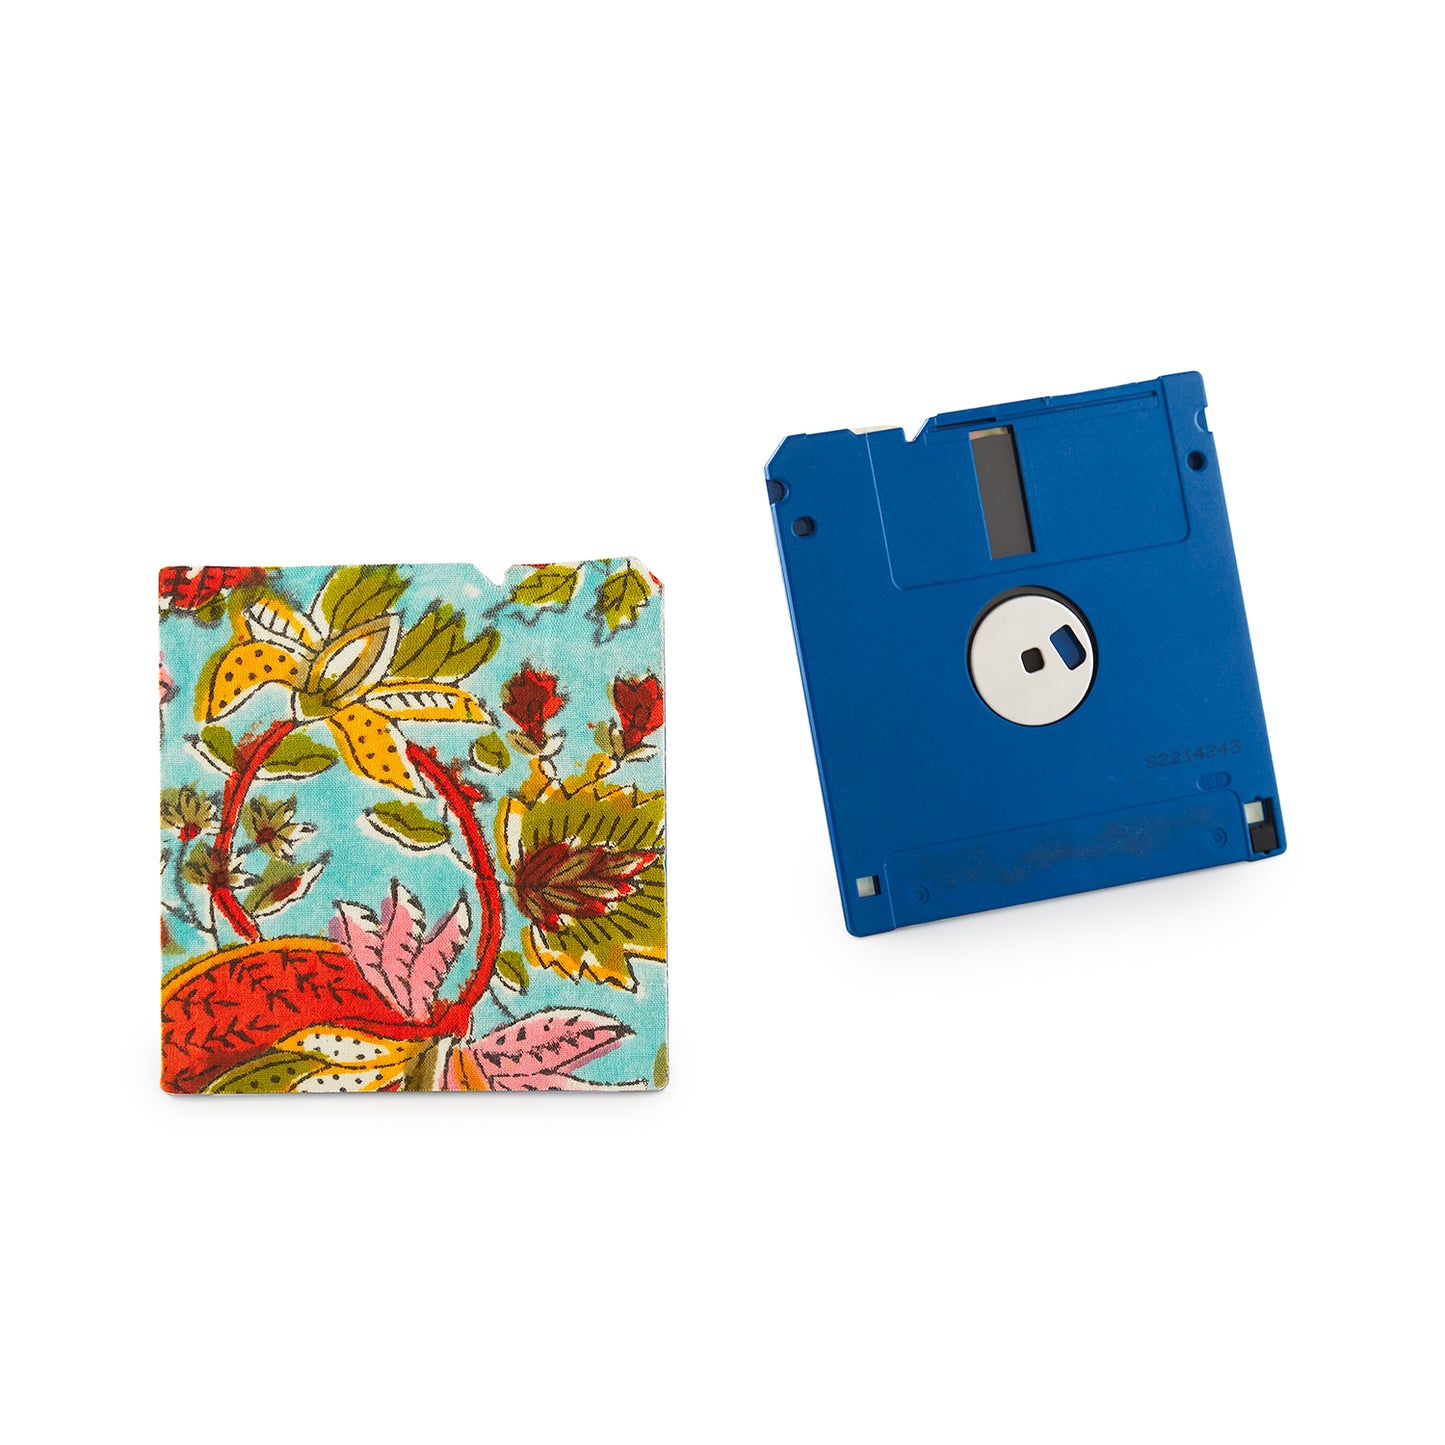 Light Turquoise Blue - Floppy Disk Coaster Set of 2